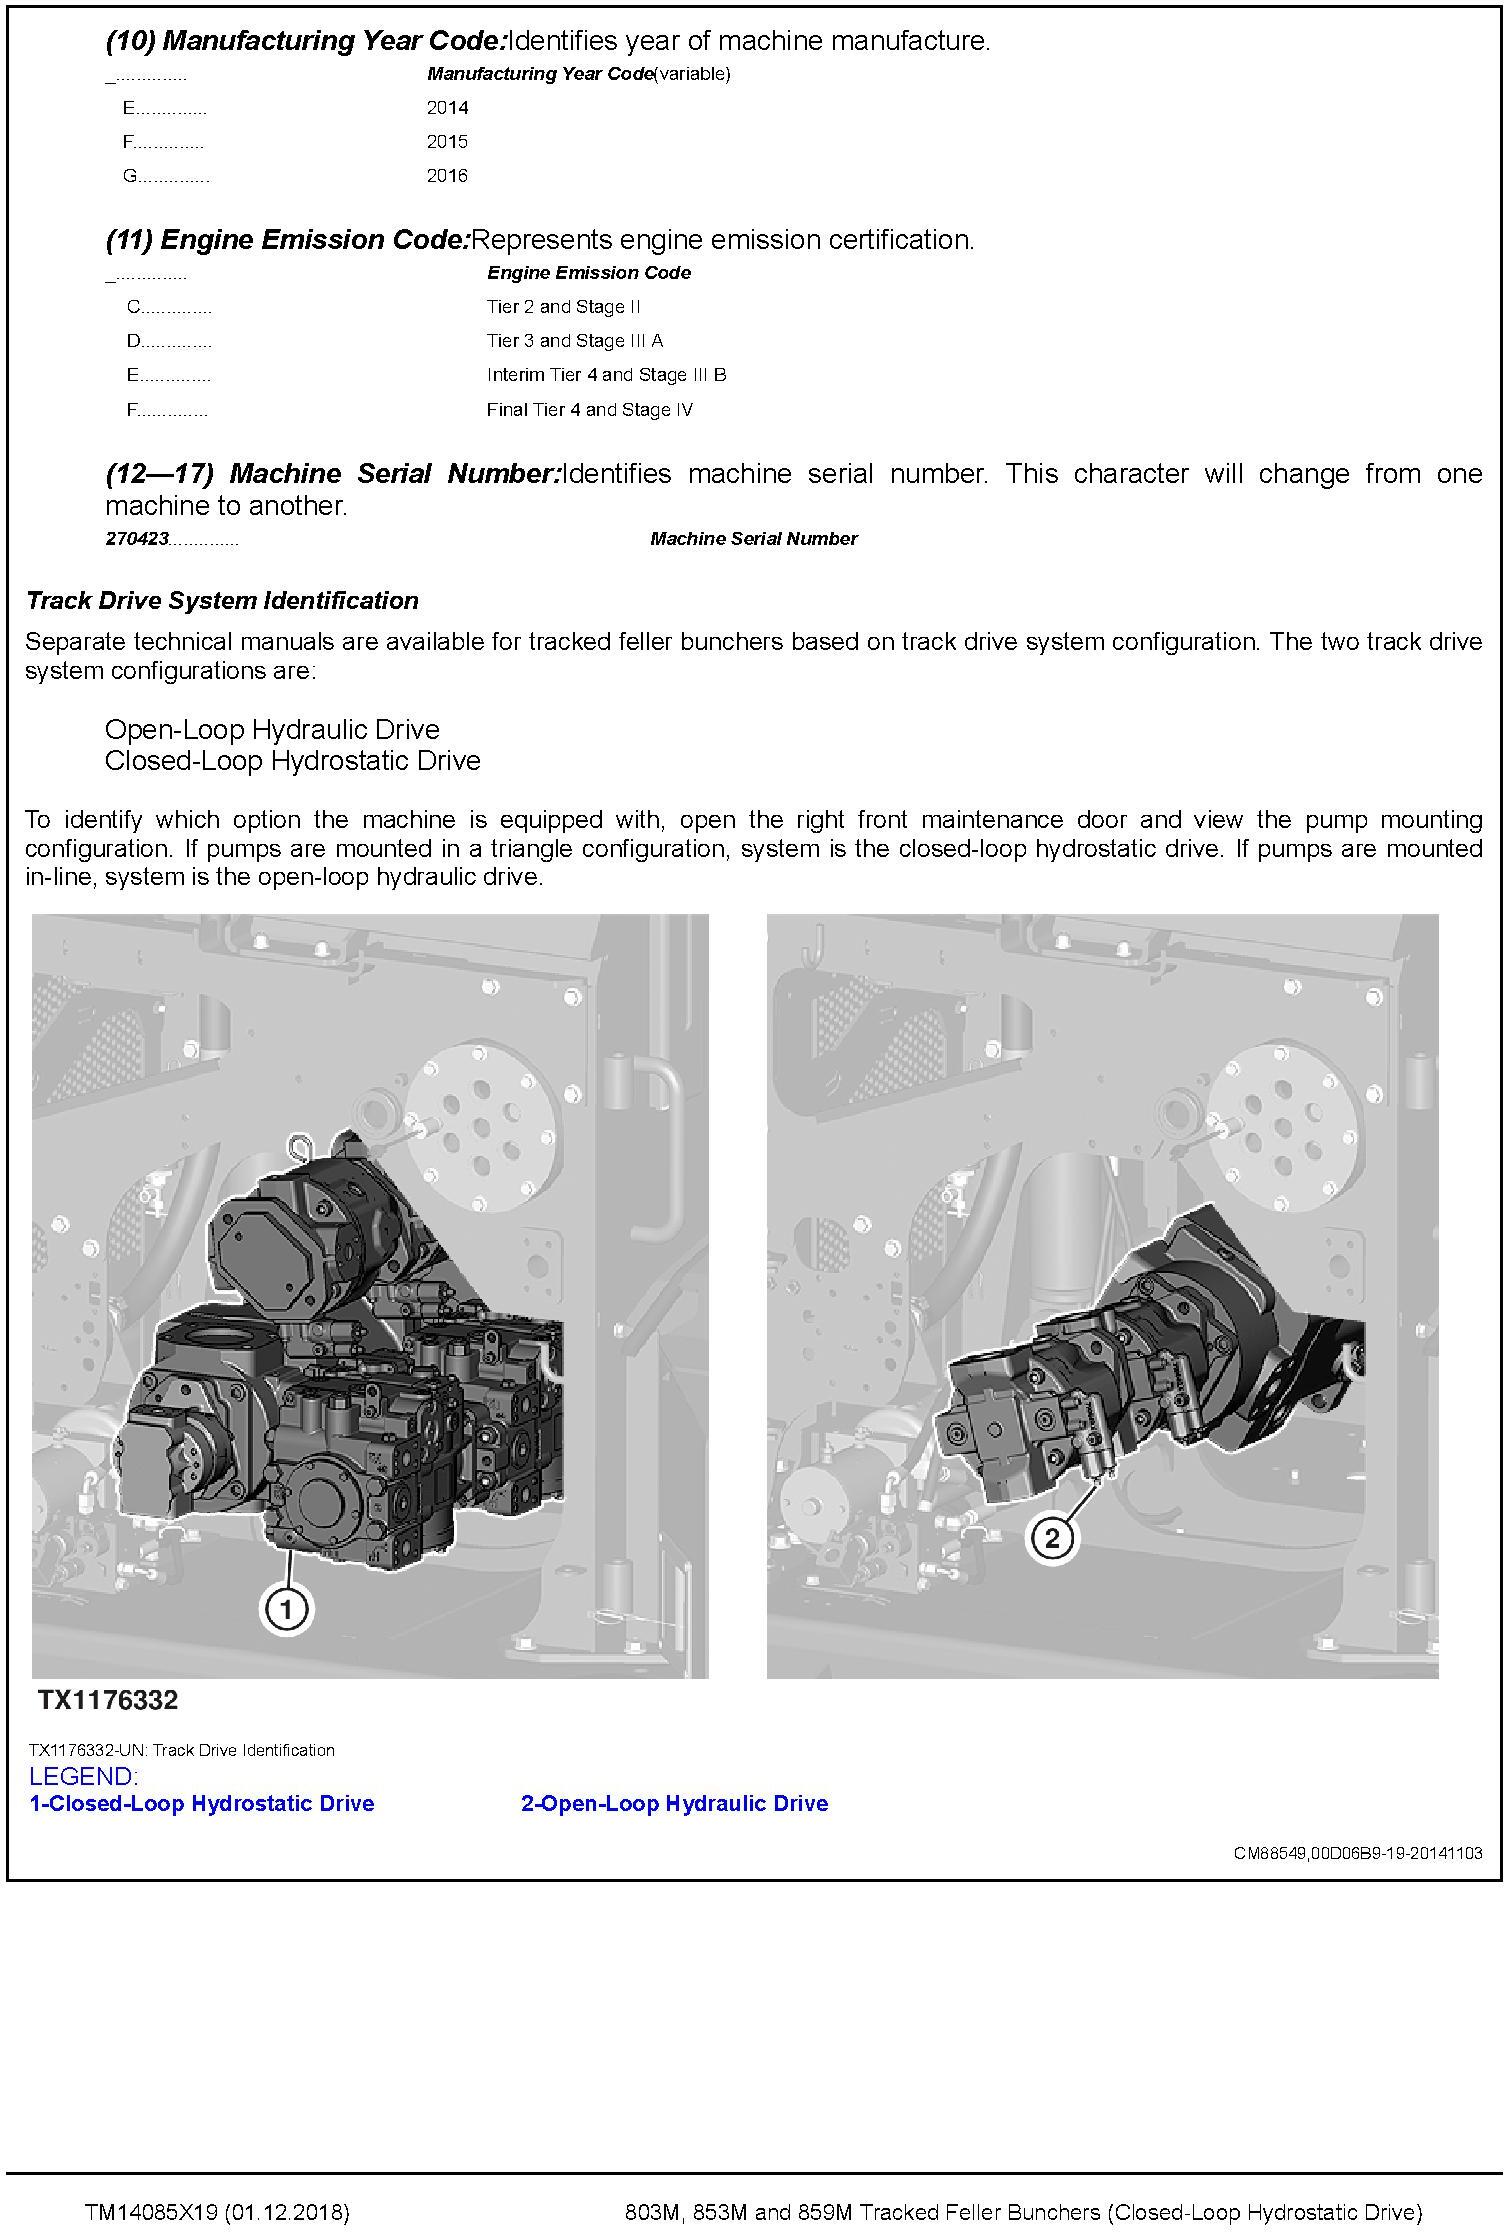 John Deere 803M,853M (SN.F293917-,L343918-) Feller Buncher(Closed-Loop) Diagnostic Manual TM14085X19 - 1